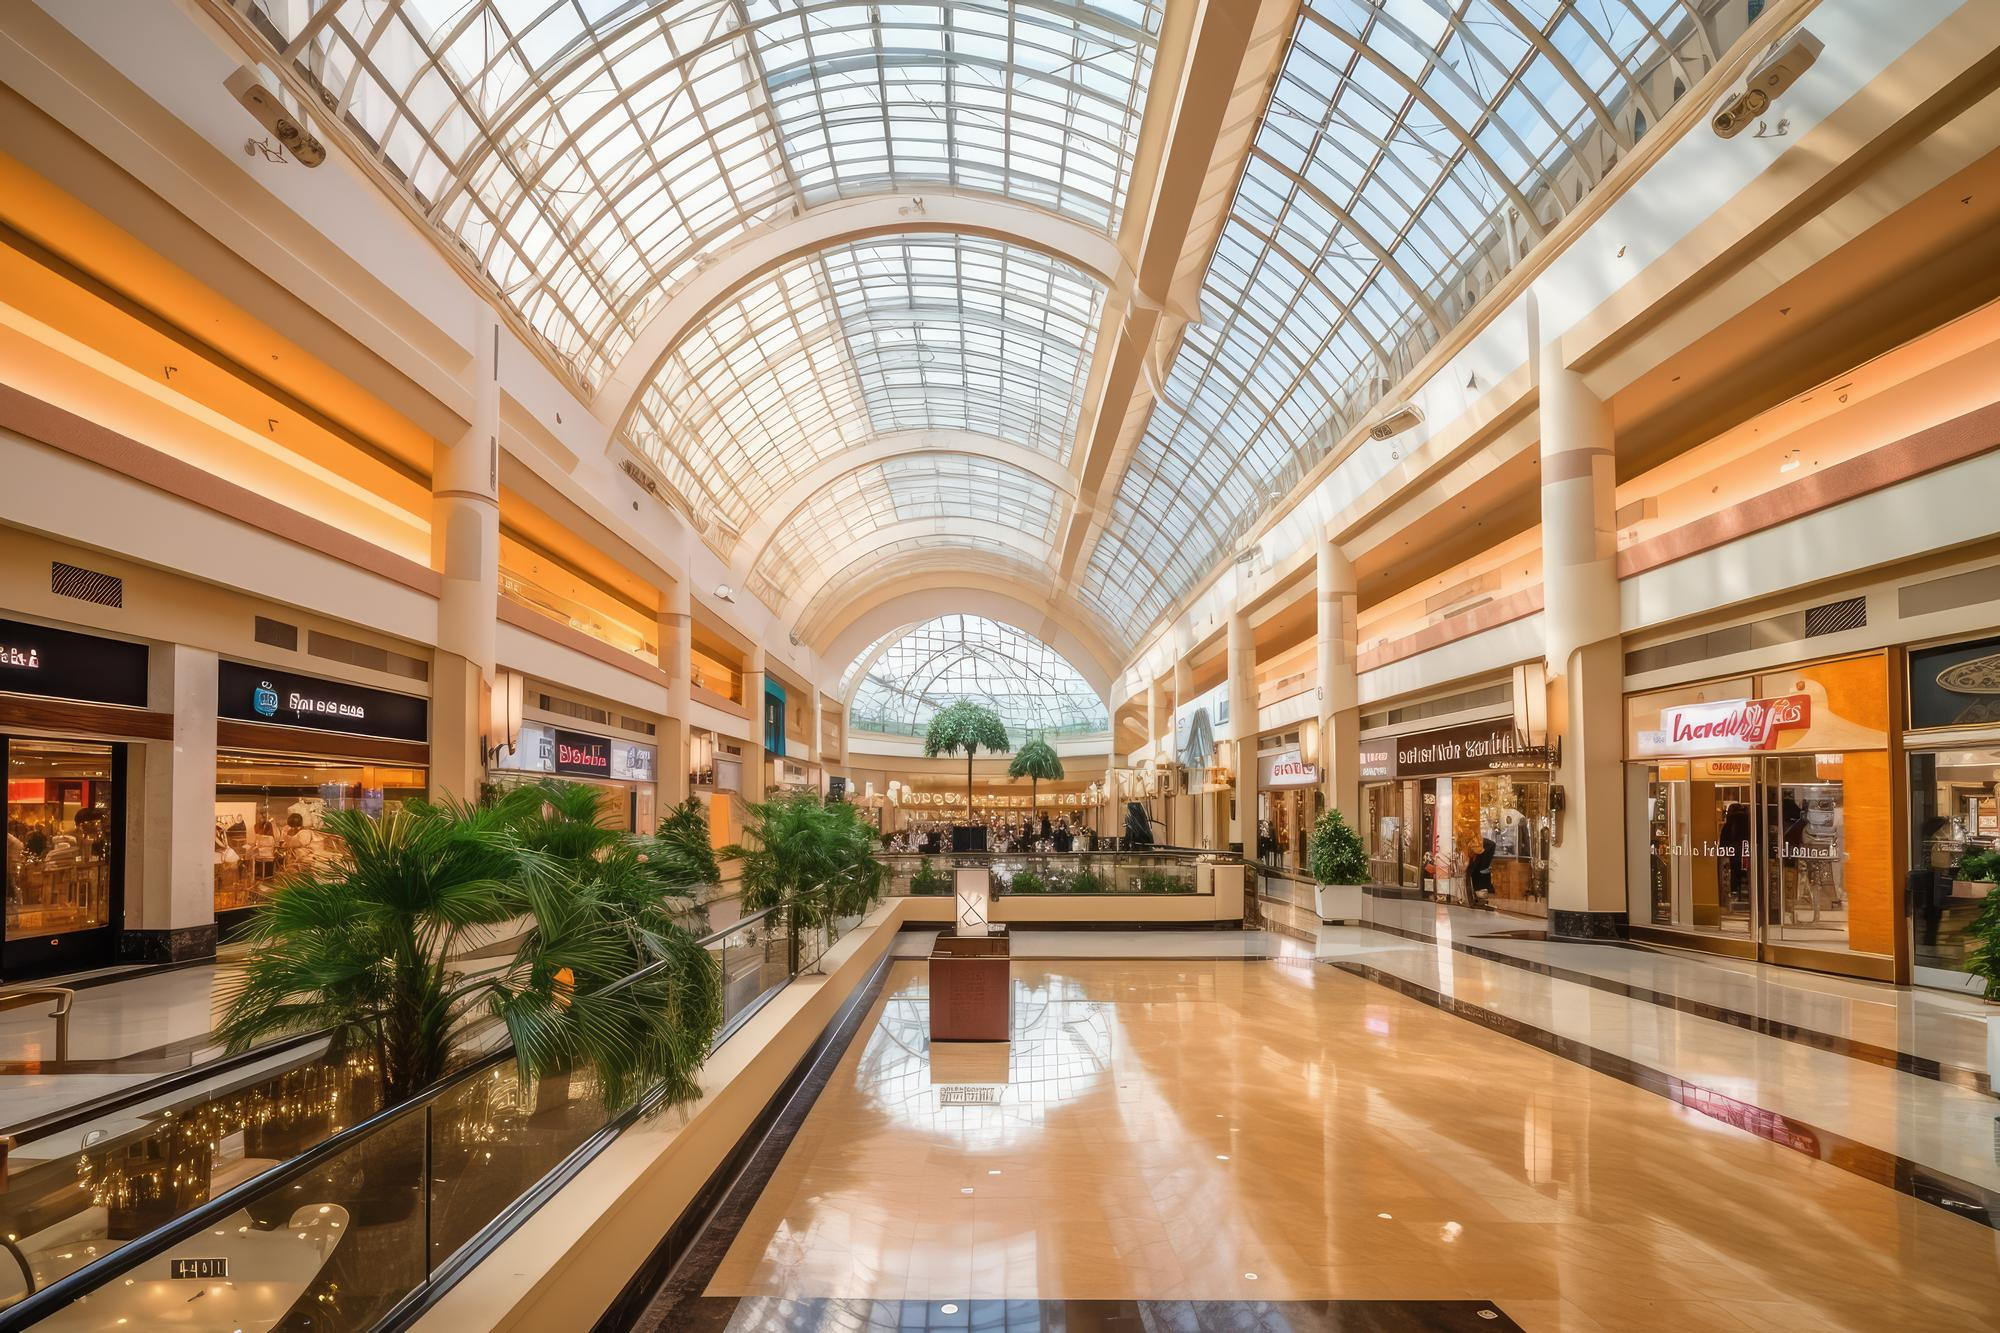 Retail Store & Shopping Mall interior